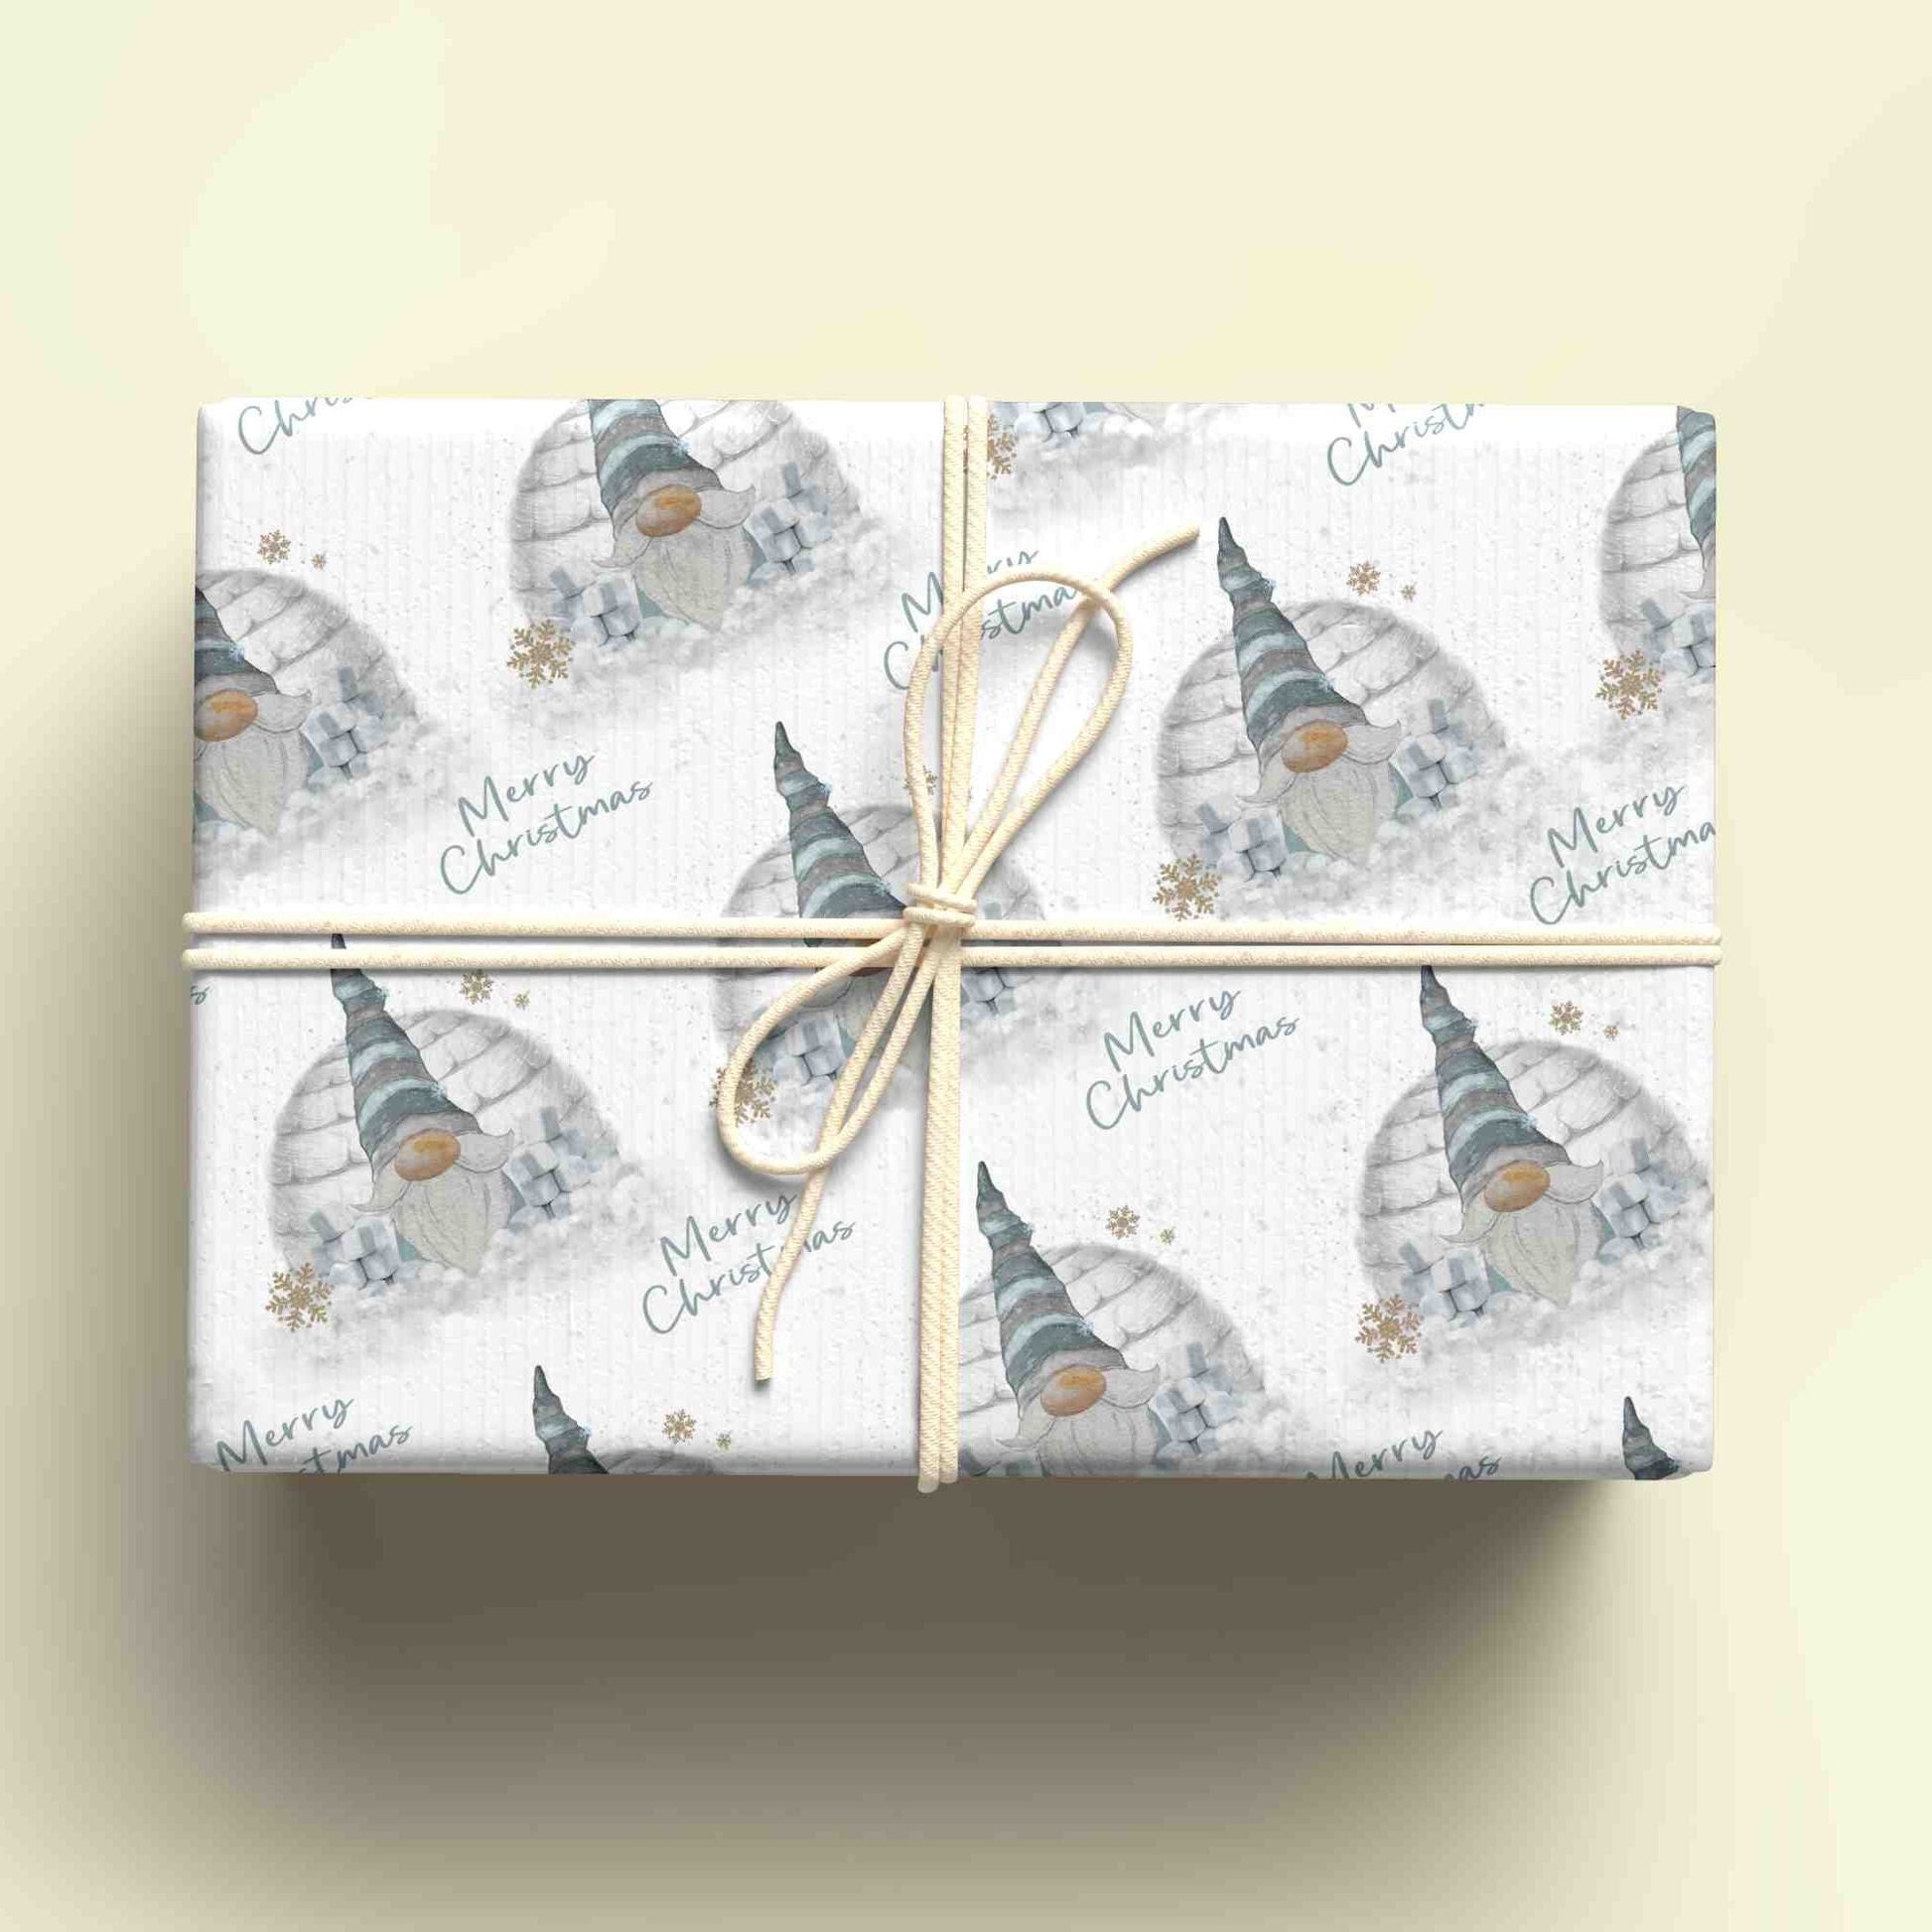 Personalised Christmas Gonk Wrapping Paper - Custom Name Gift Wrap - Festive Gonk Design - Unique Xmas Gift Wrap - UK Seller